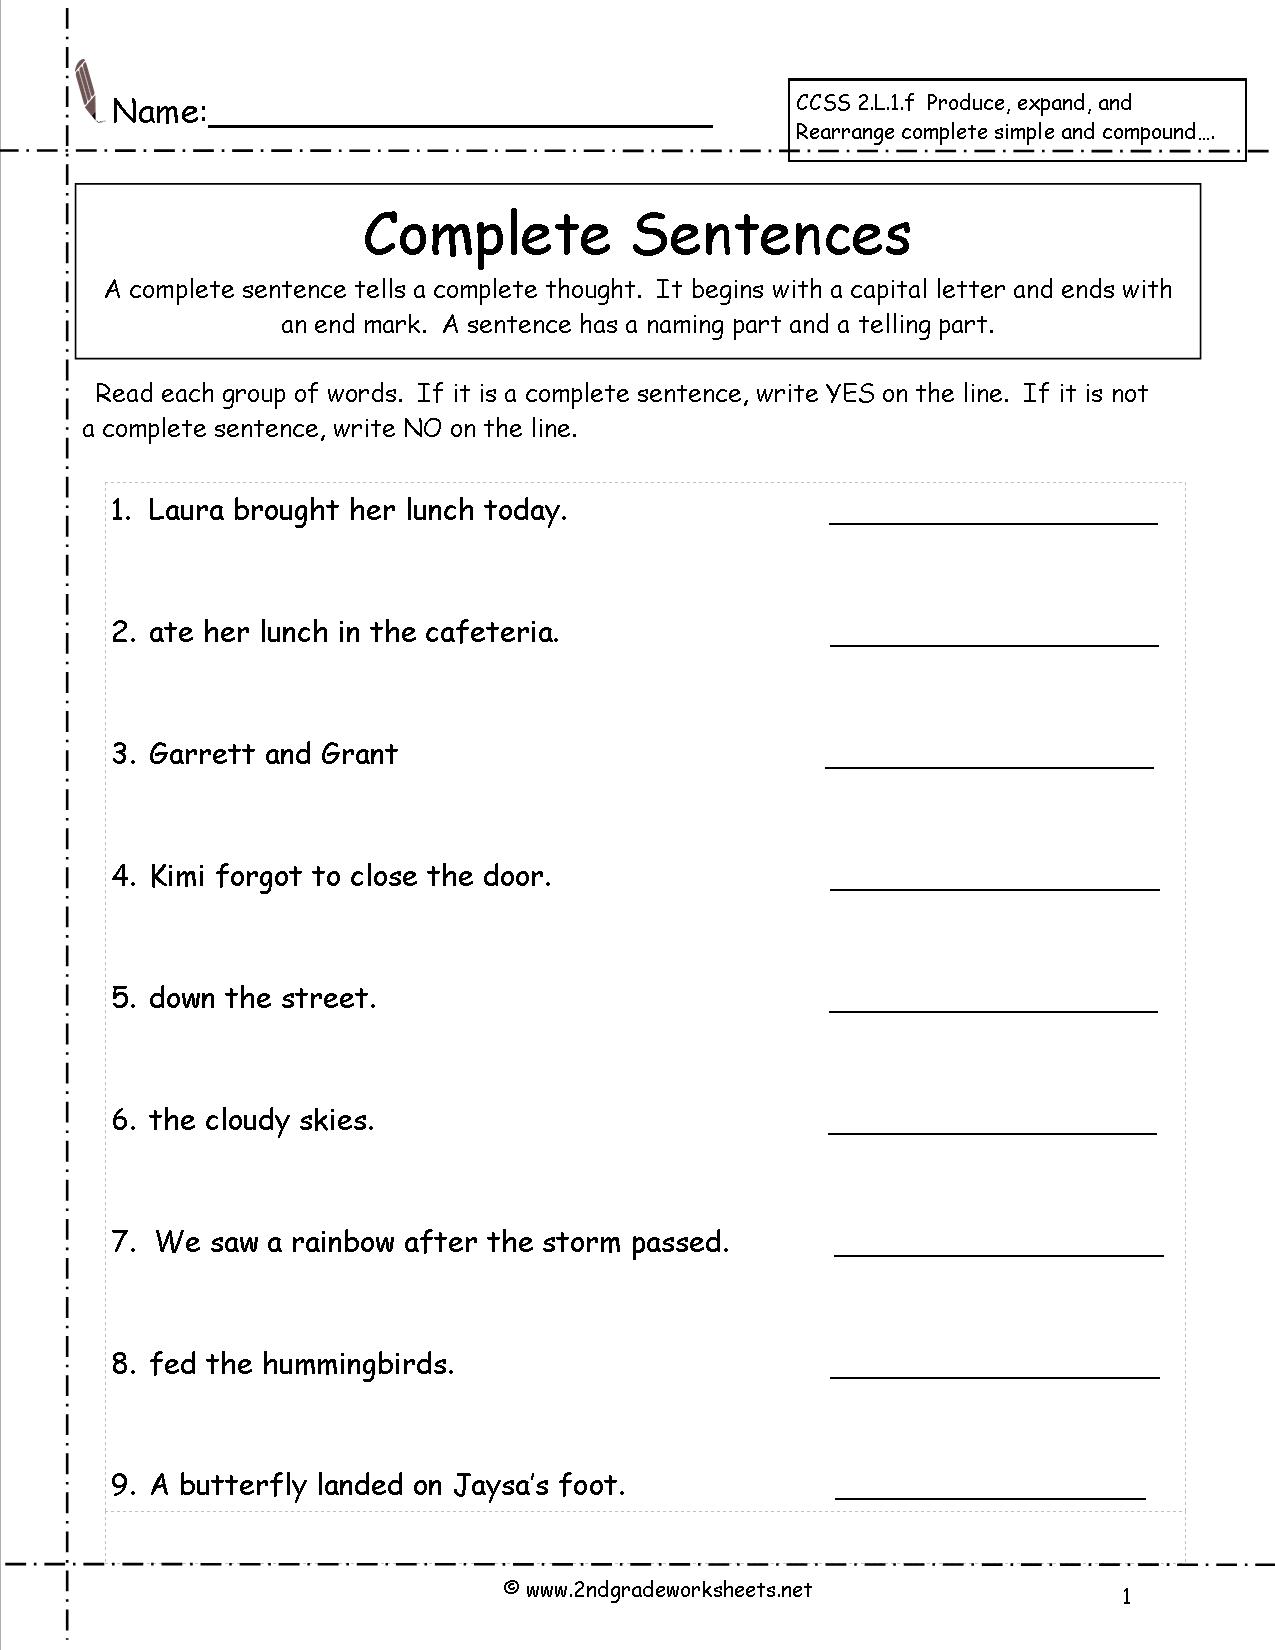 compound-sentences-worksheet-pdf